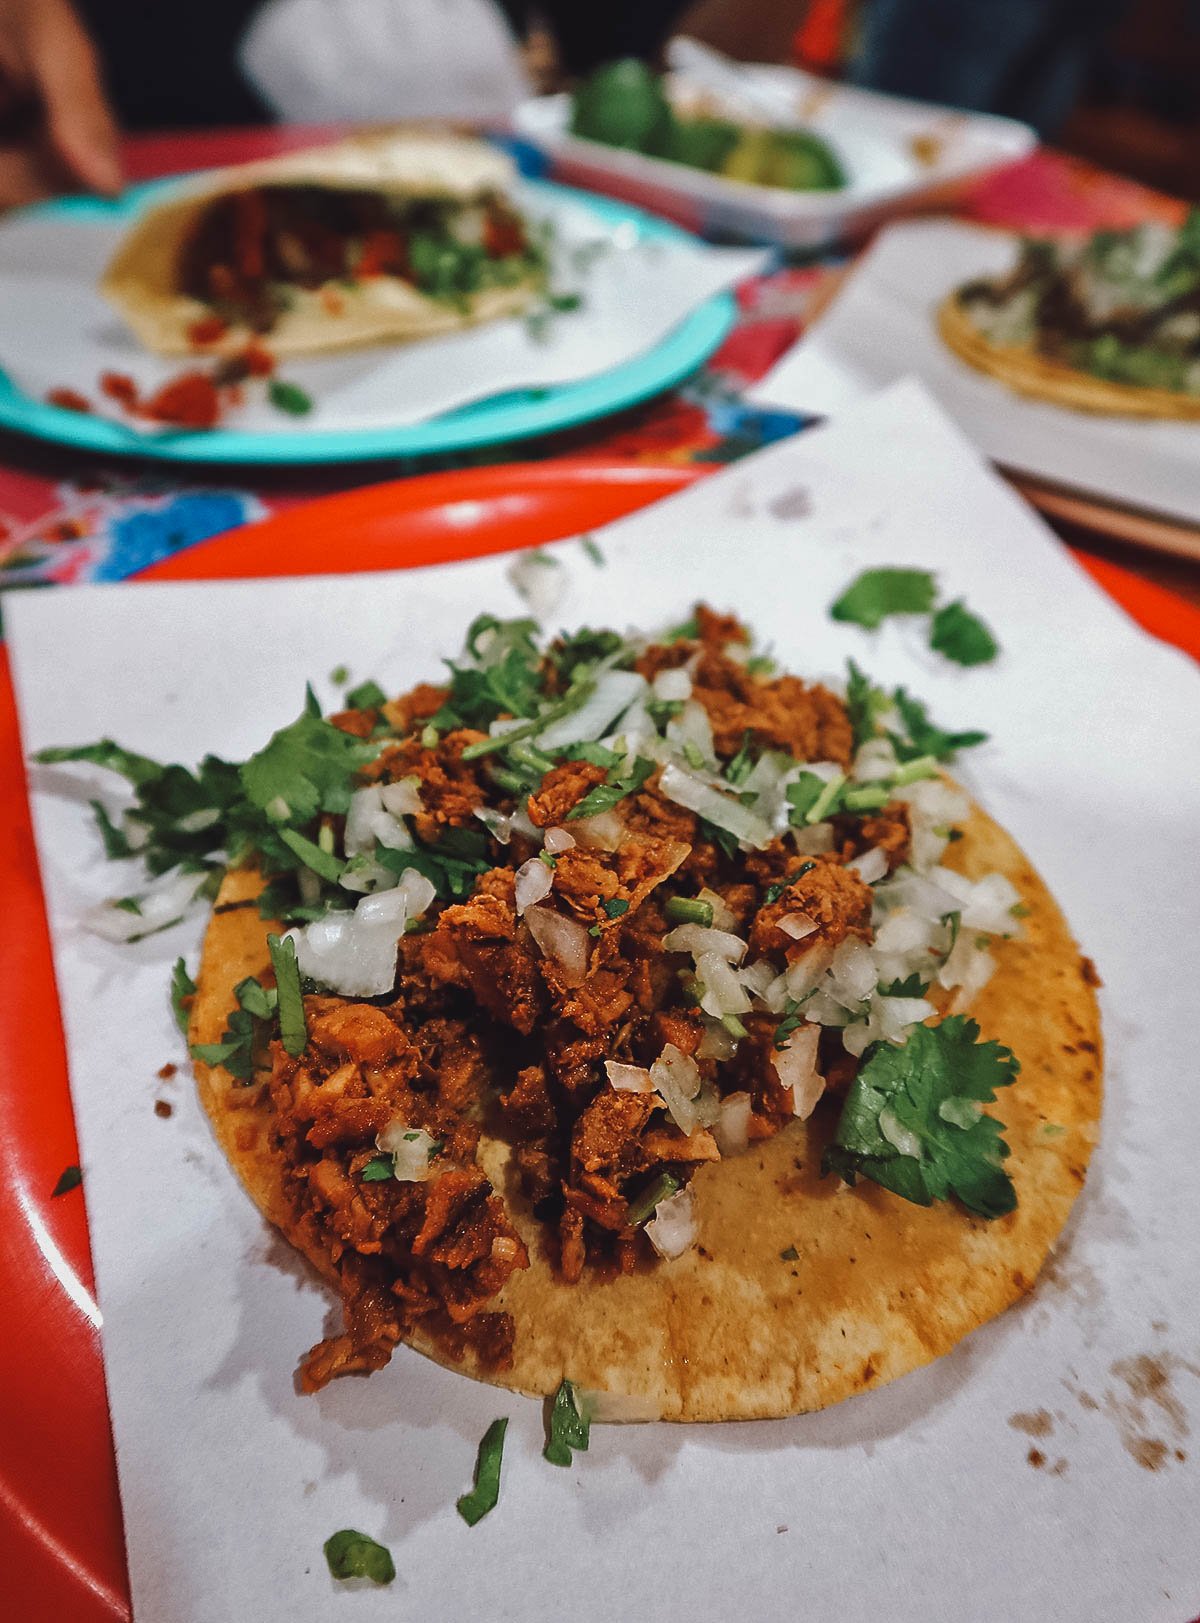 Taco de adobada at a restaurant in Guanajuato